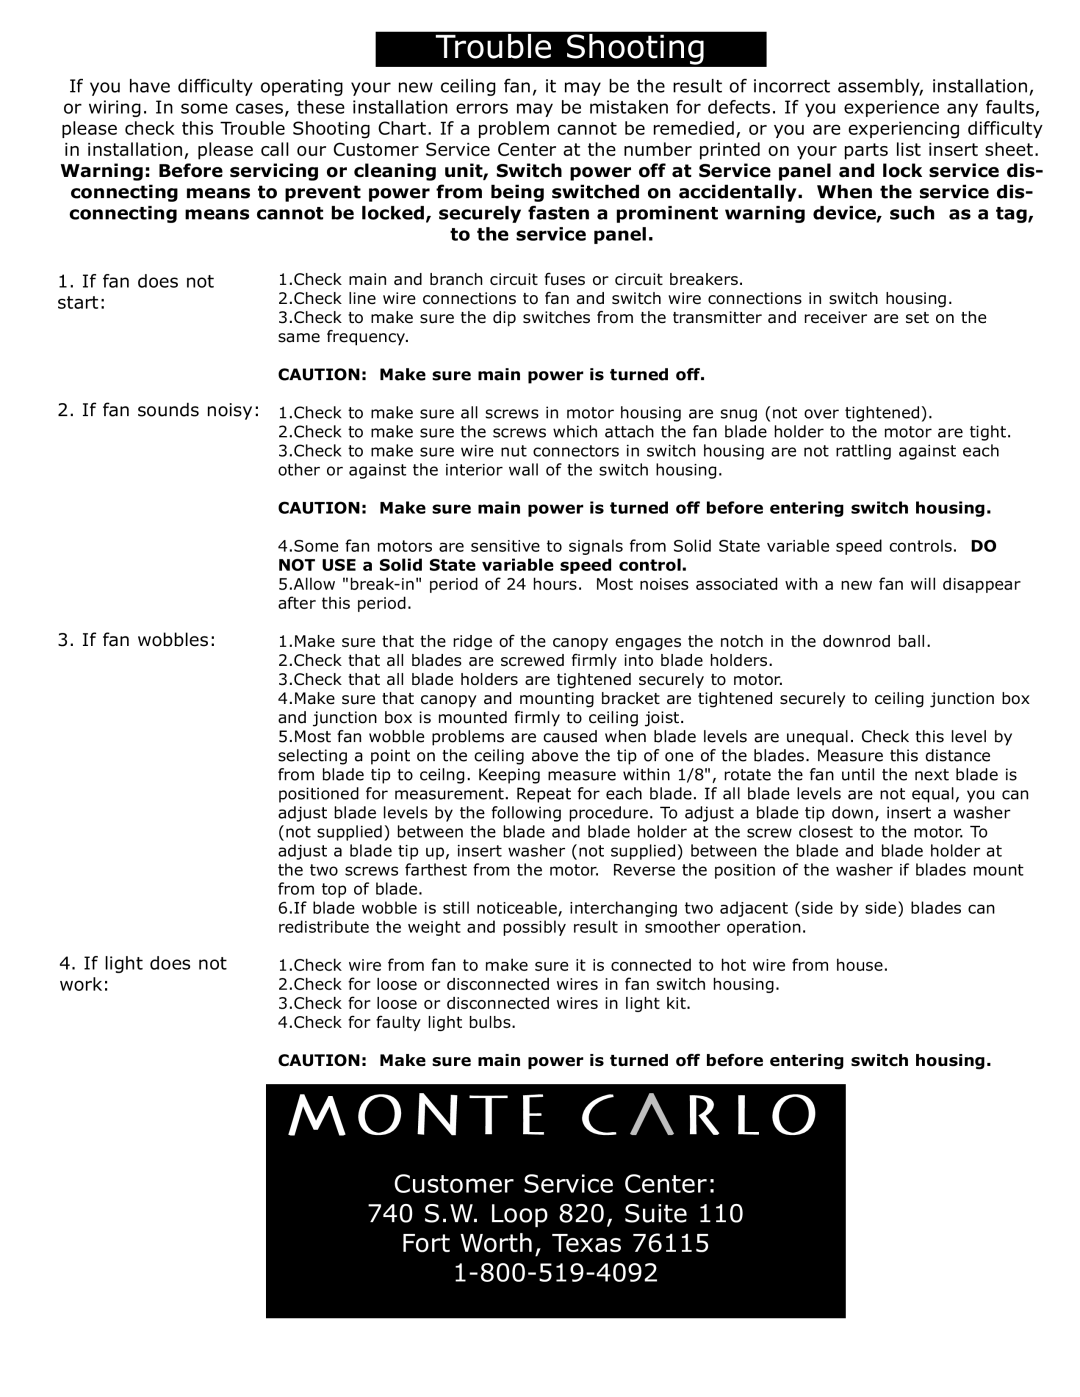 Monte Carlo Fan Company 5AHR60 Customer Service Center 740 S.W. Loop 820, Suite, Fort Worth, Texas 1-800-519-4092 